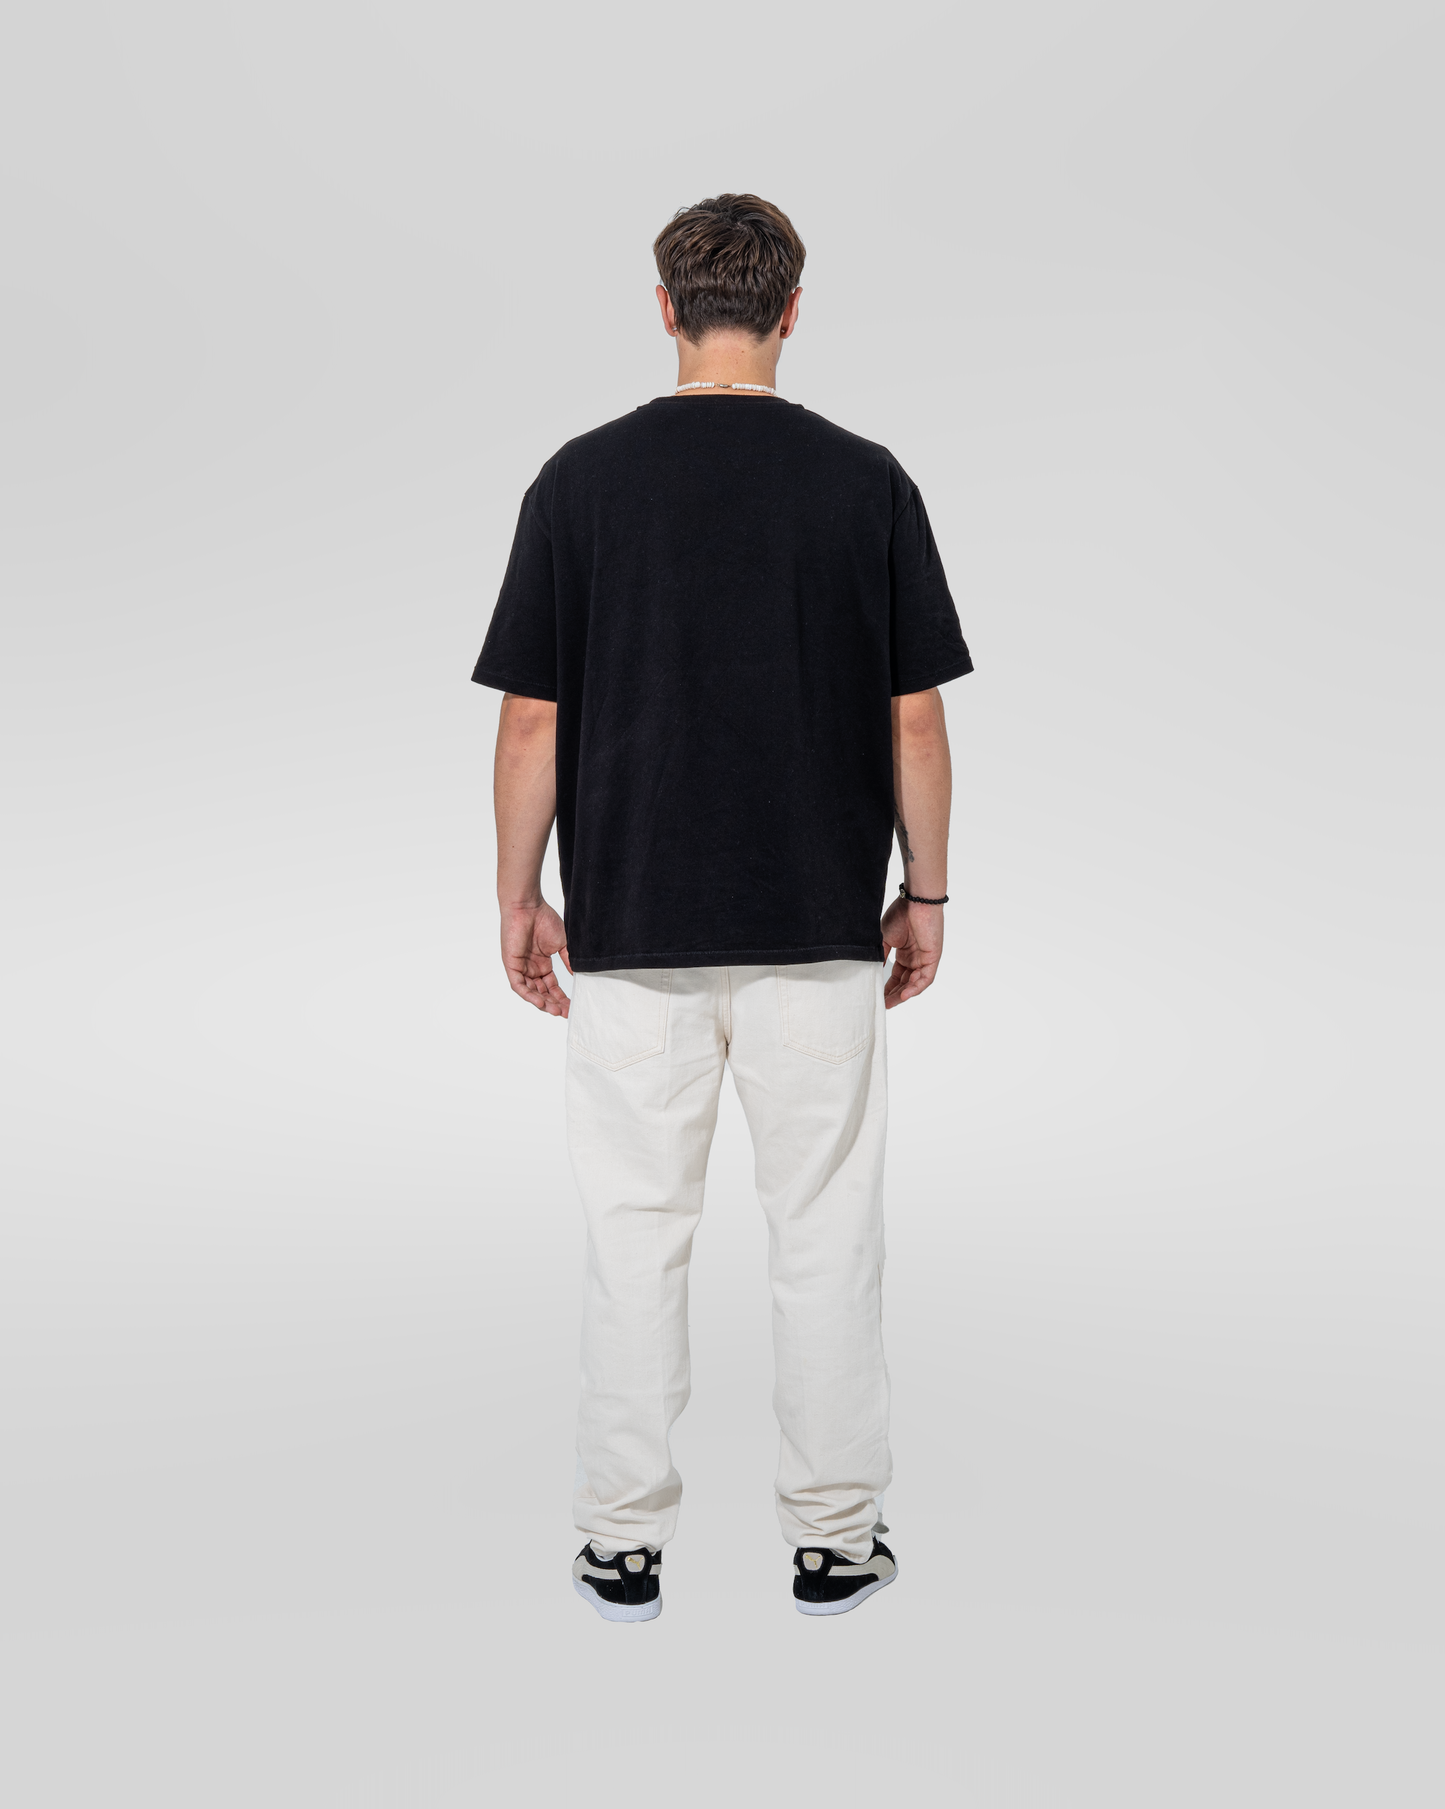 2FRATELLI Oversized T-Shirt schwarz men (unisex) - 2FRATELLI